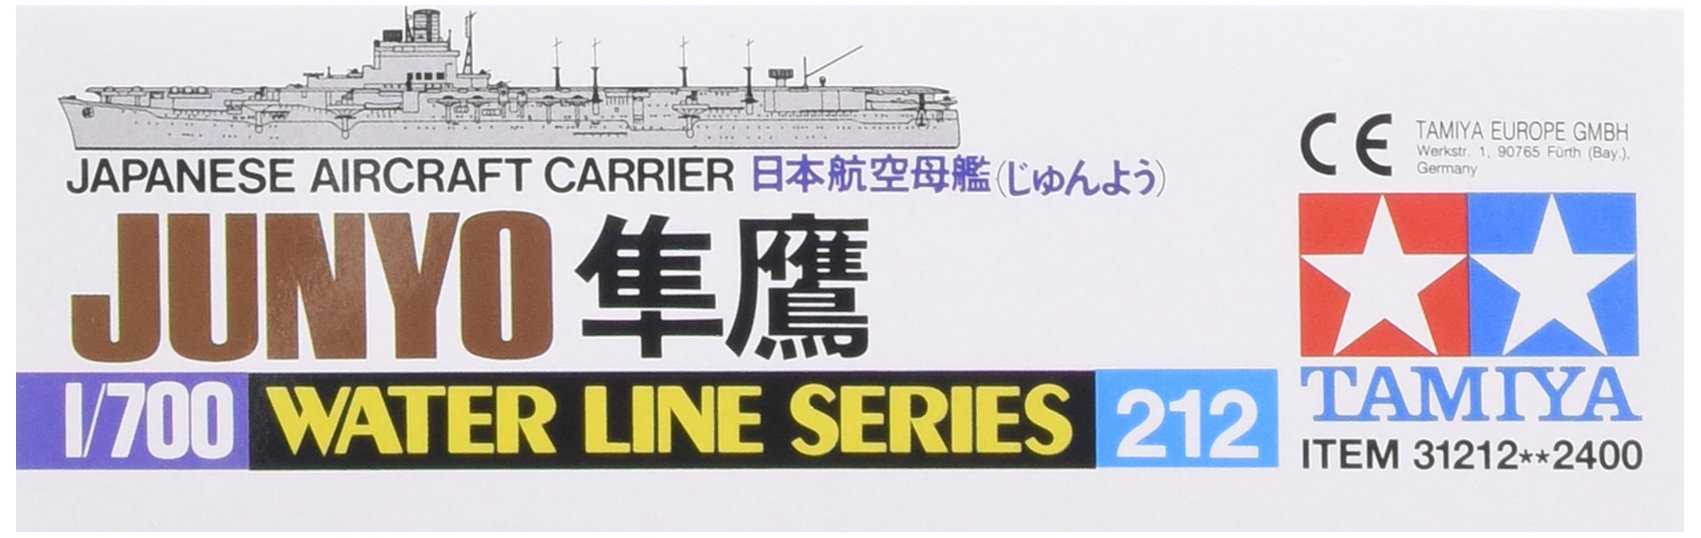 Tamiya 31212 1/700 Waterline Series No.212 porte-avions de la marine japonaise Hayabusa modèle en plastique